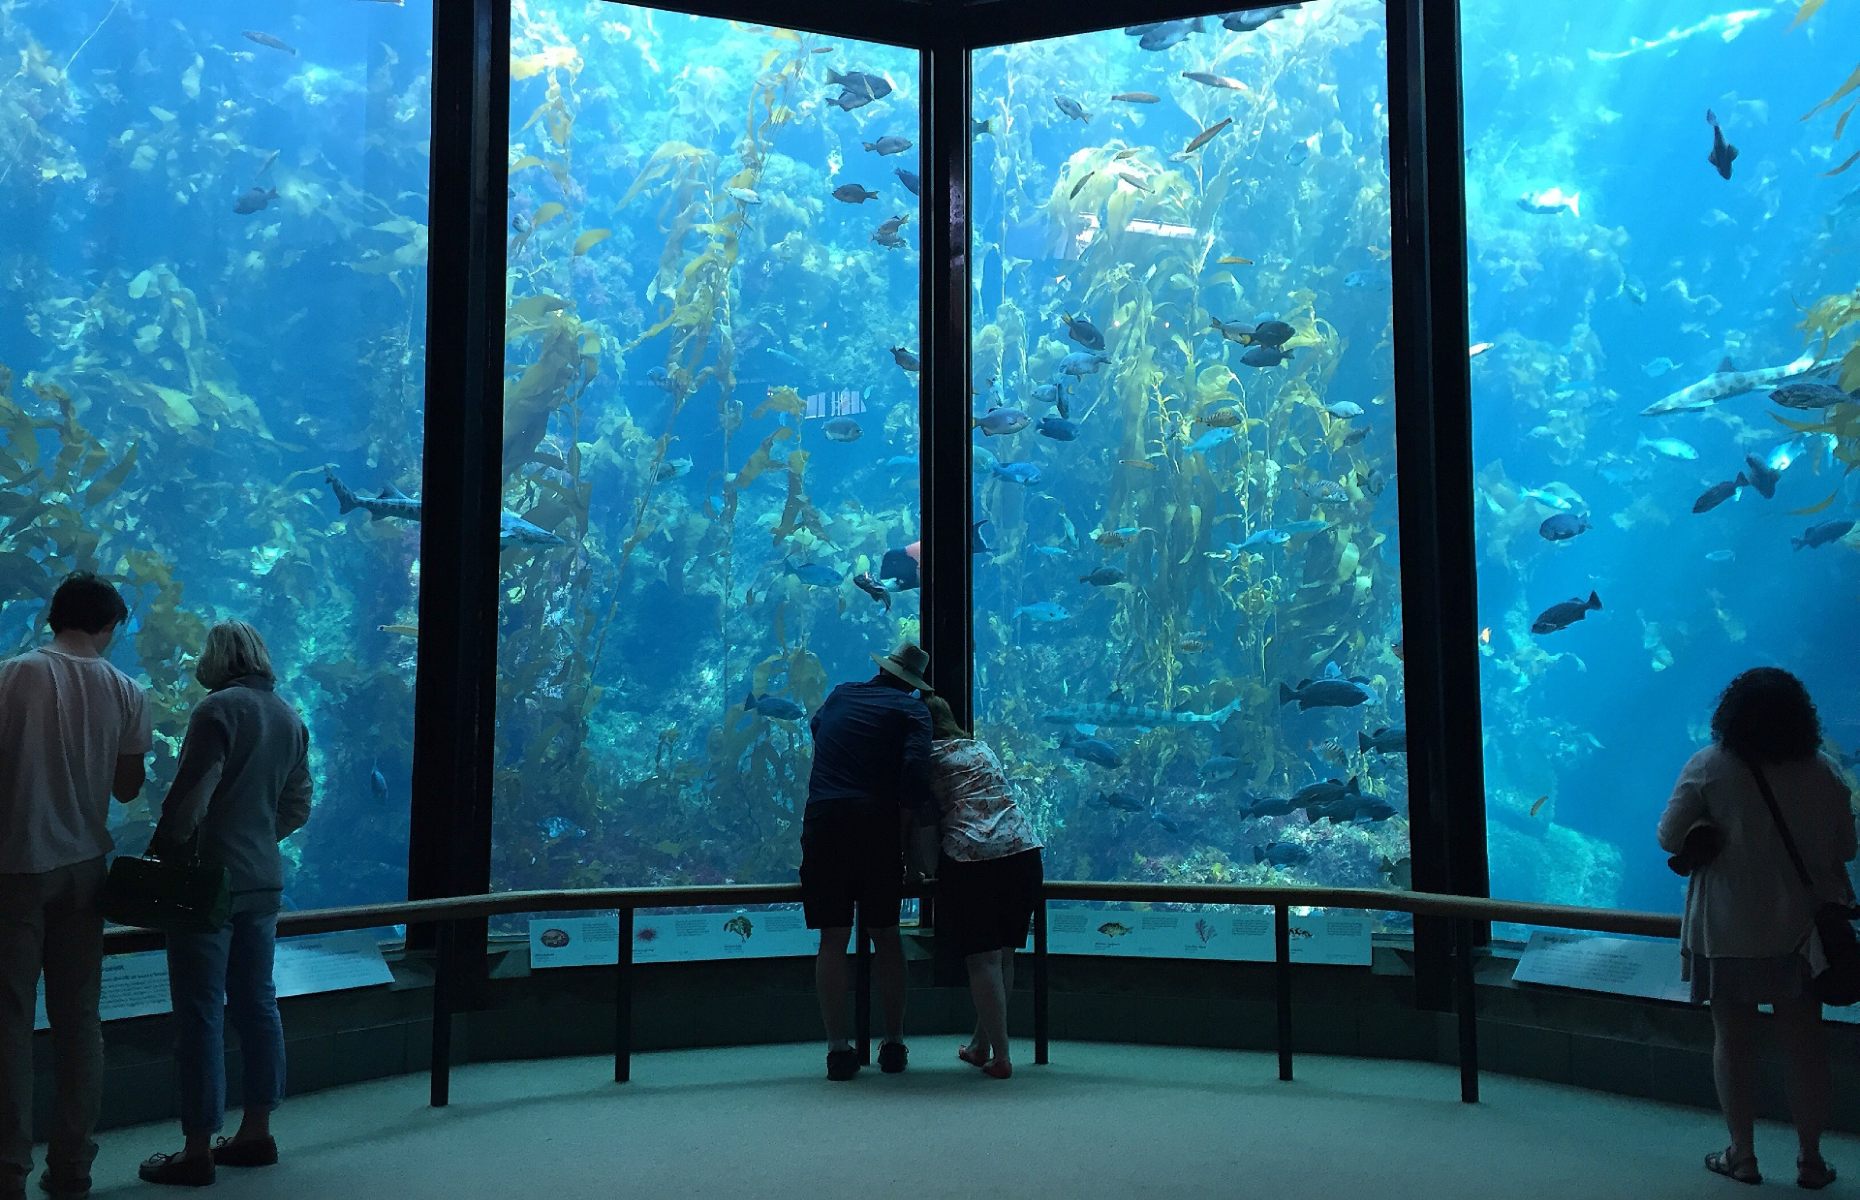 Monterey Bay Aquarium (Image: photocritical/Shutterstock)